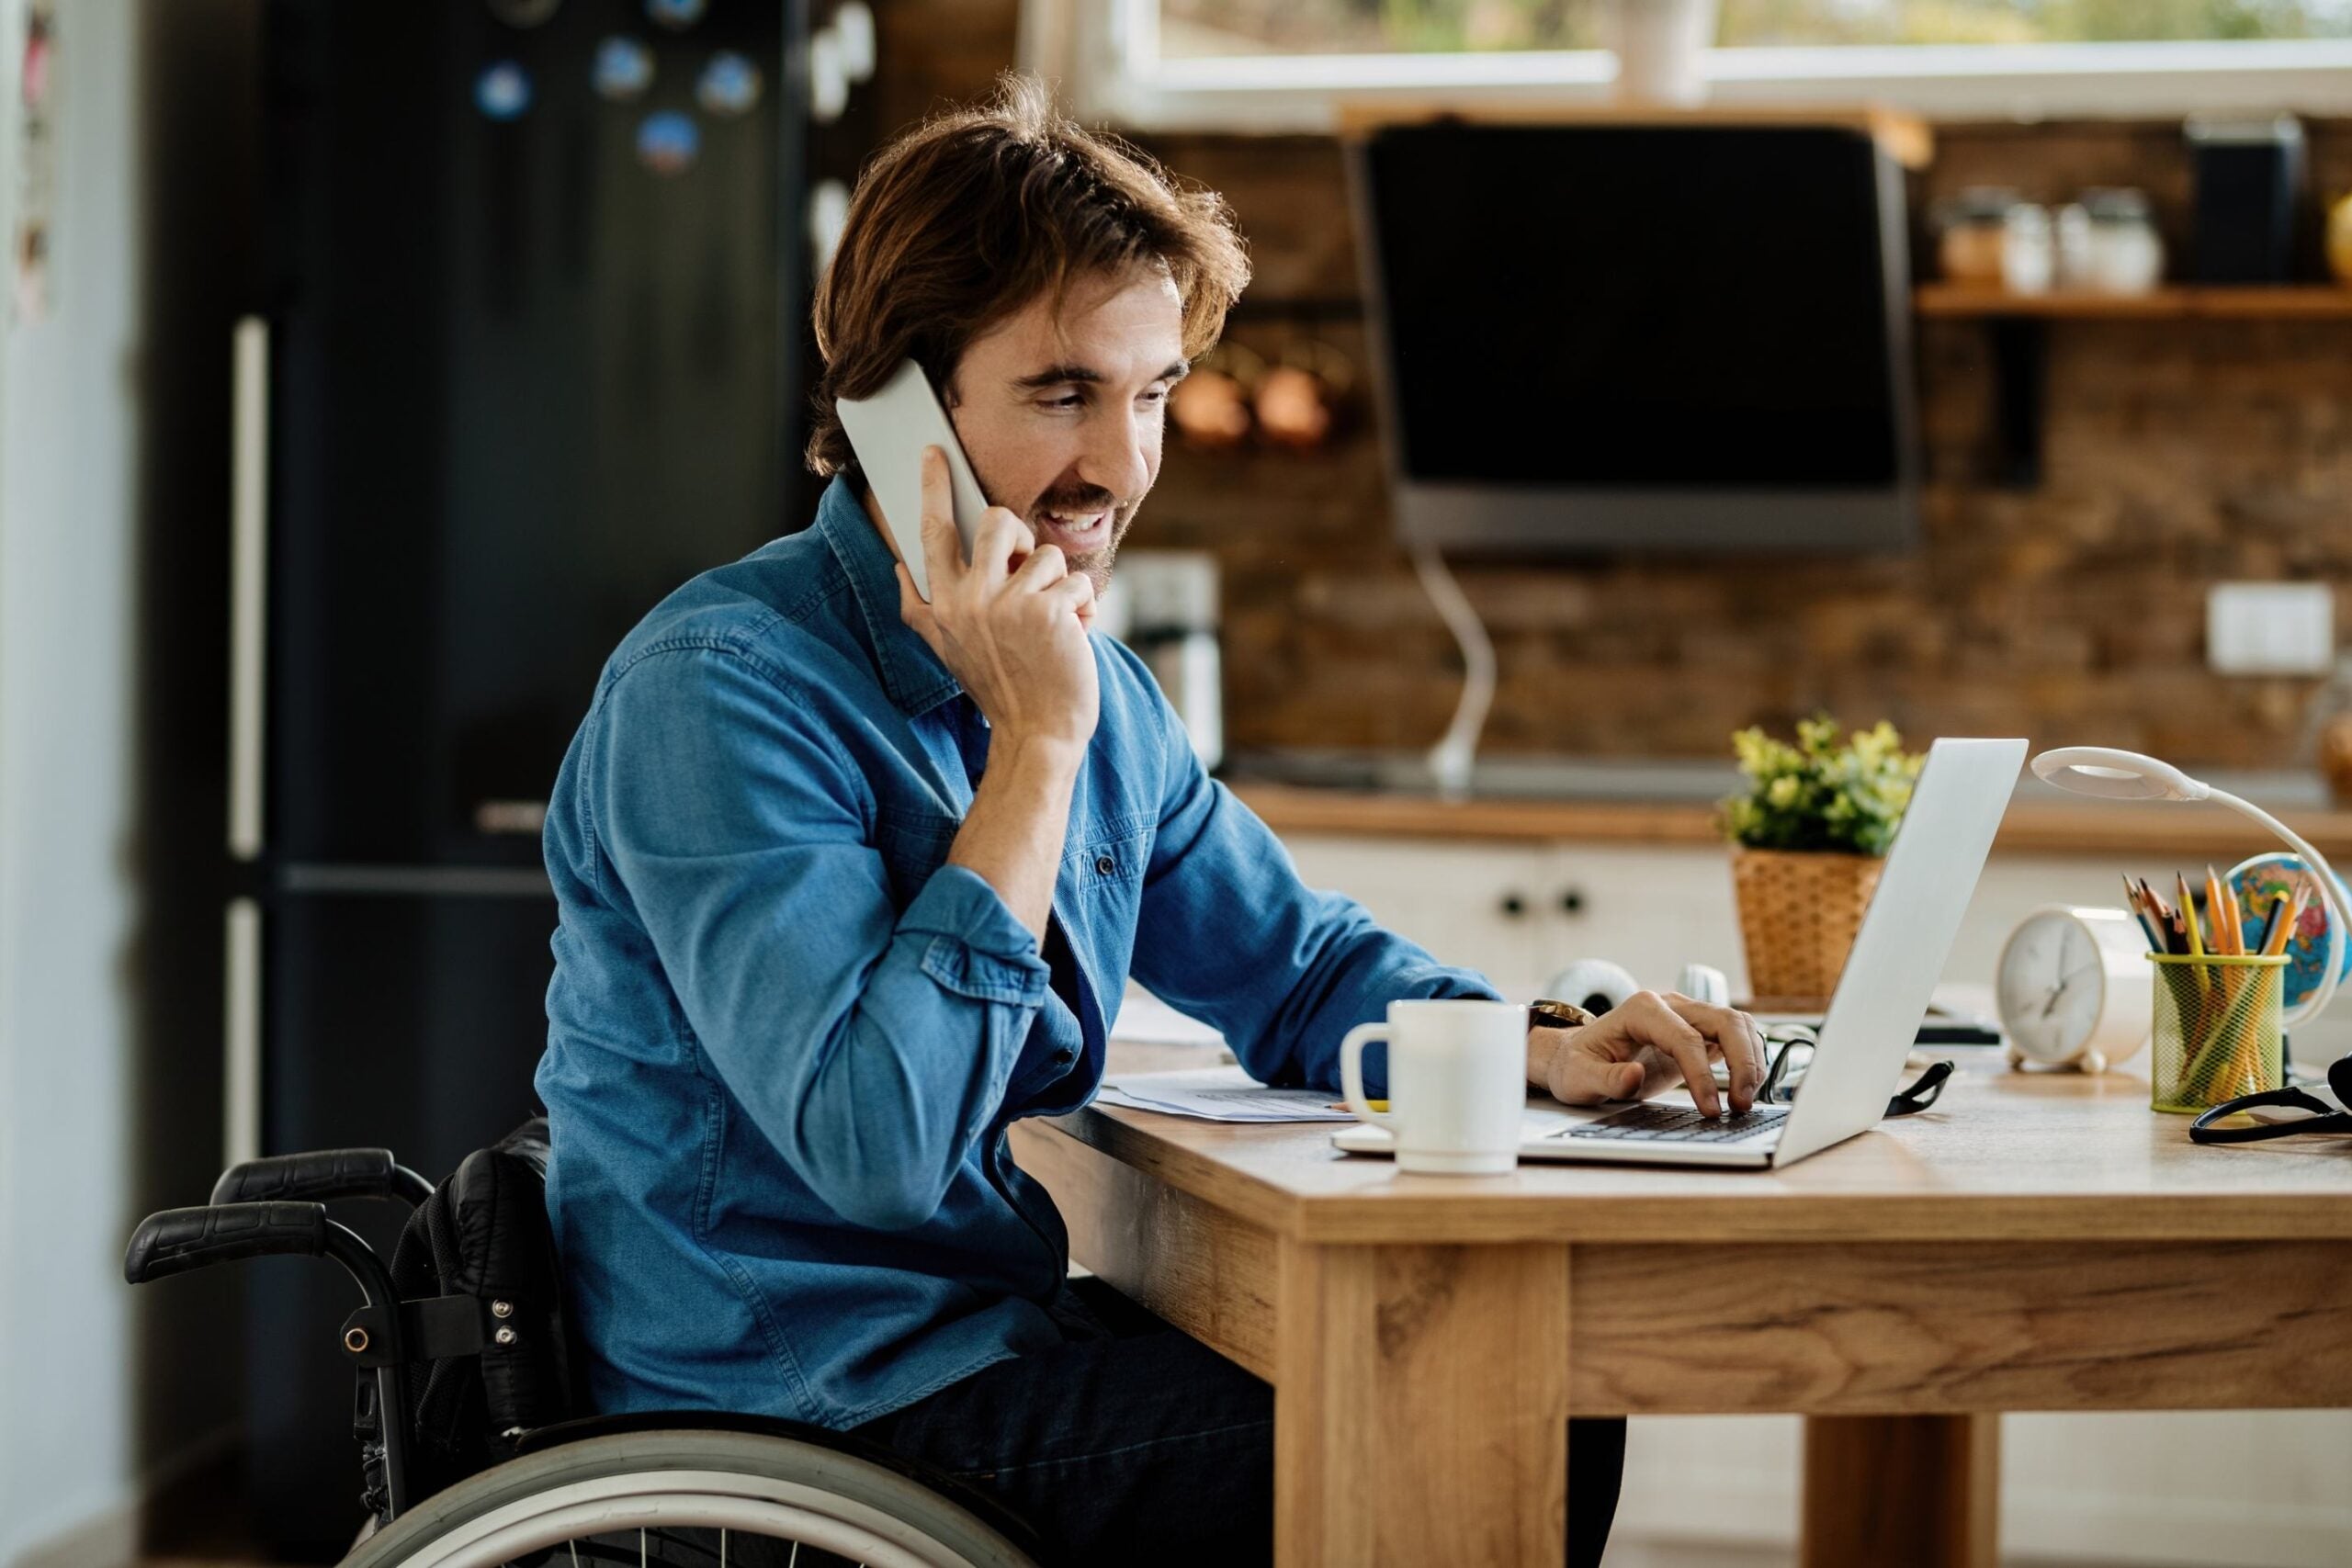 Disability Tax Credit